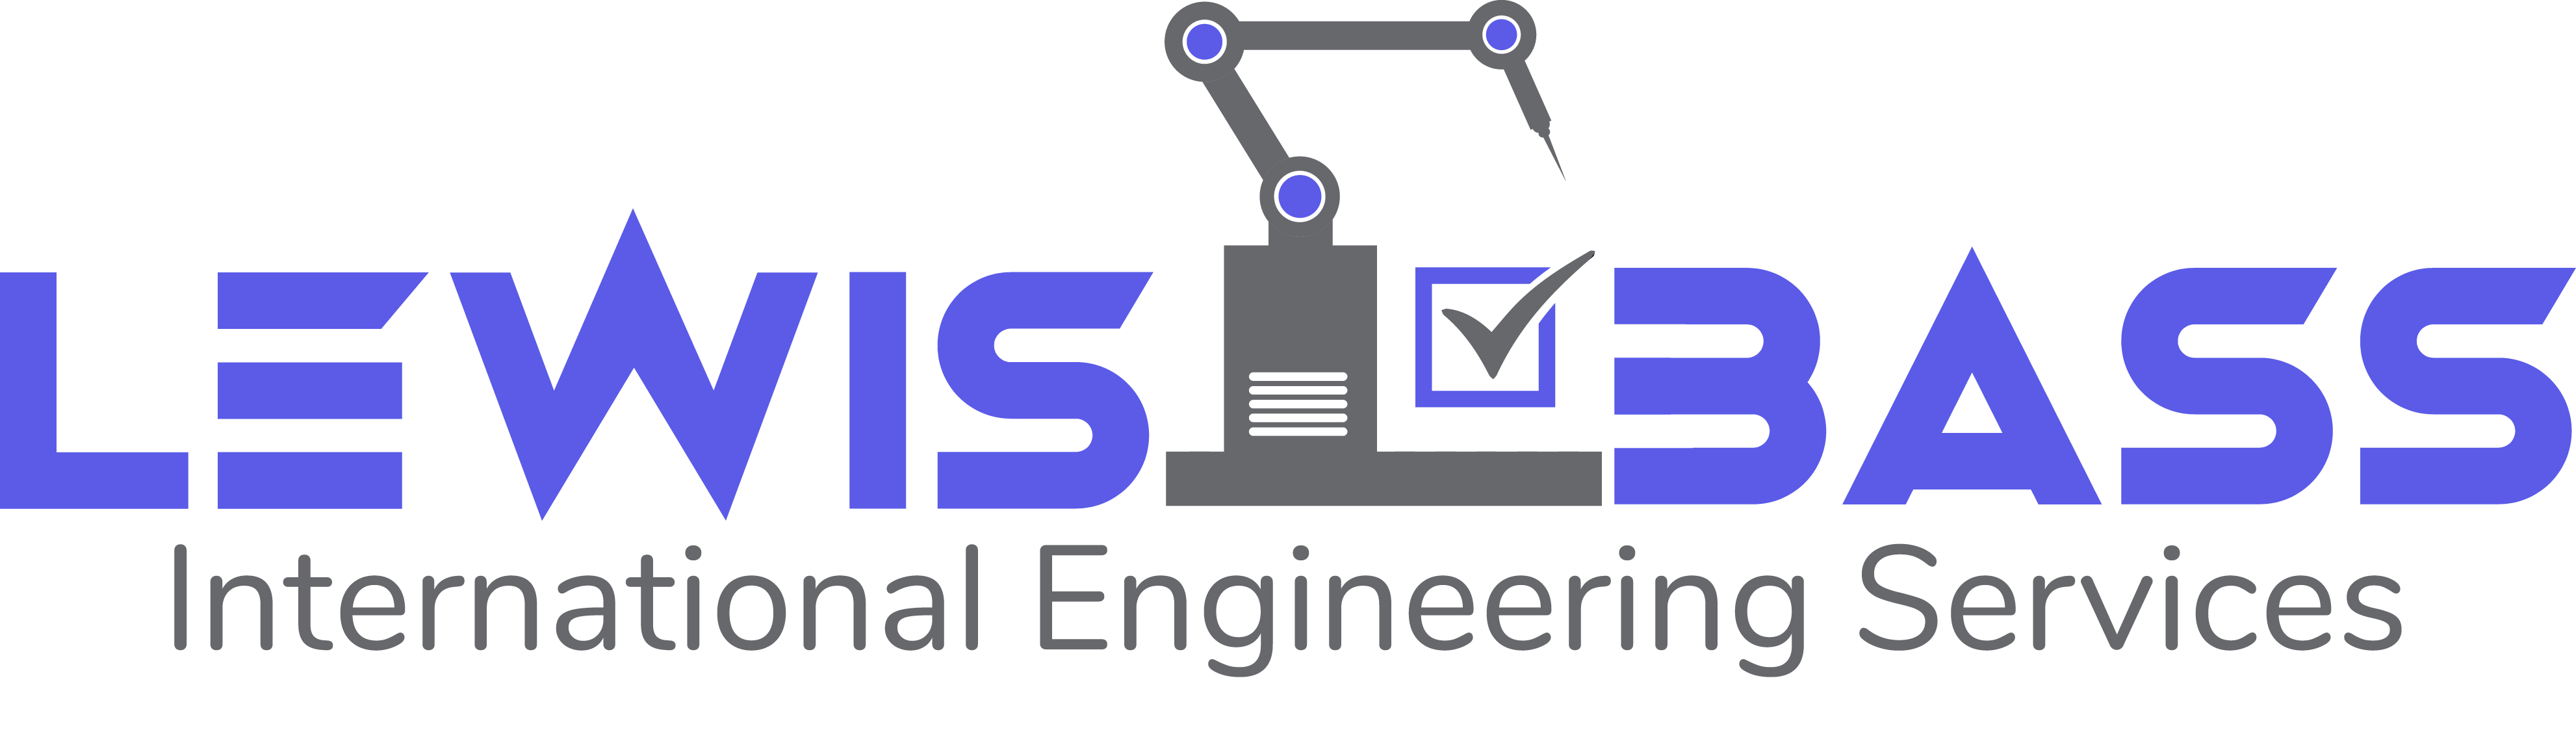 Lewis Bass International Engineering Services